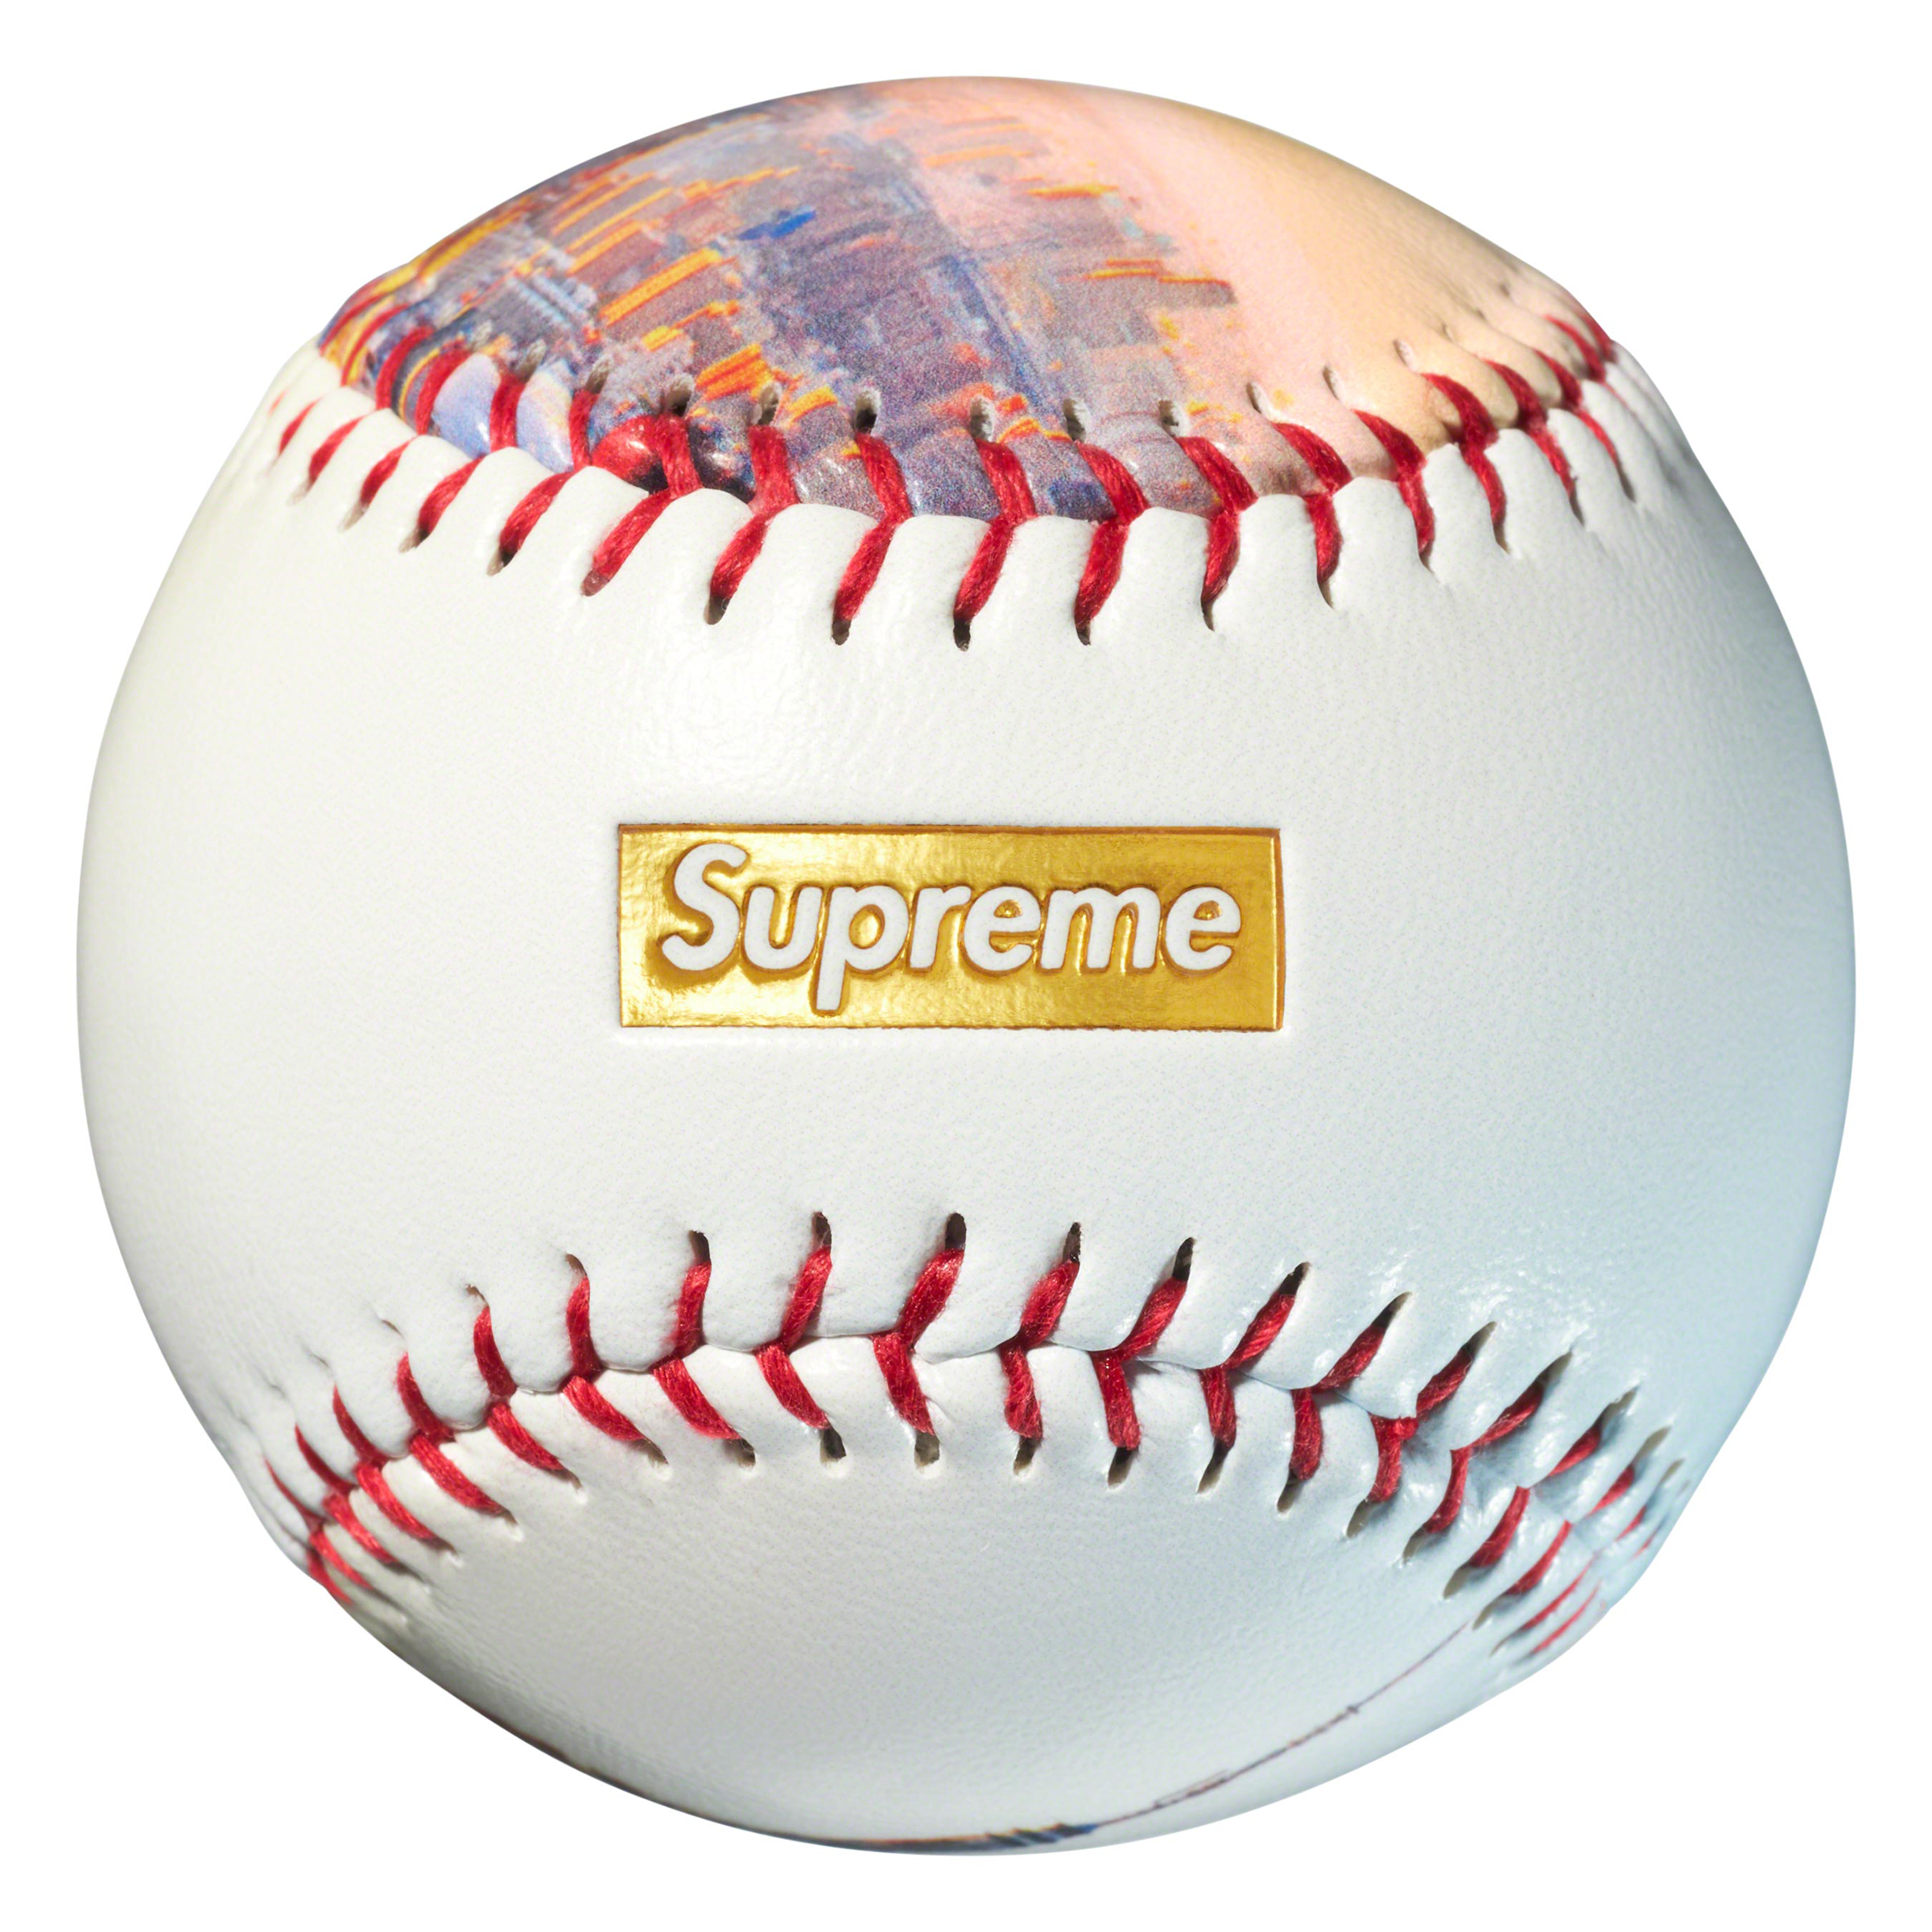 Supreme x Rawlings "Aerial Baseball"